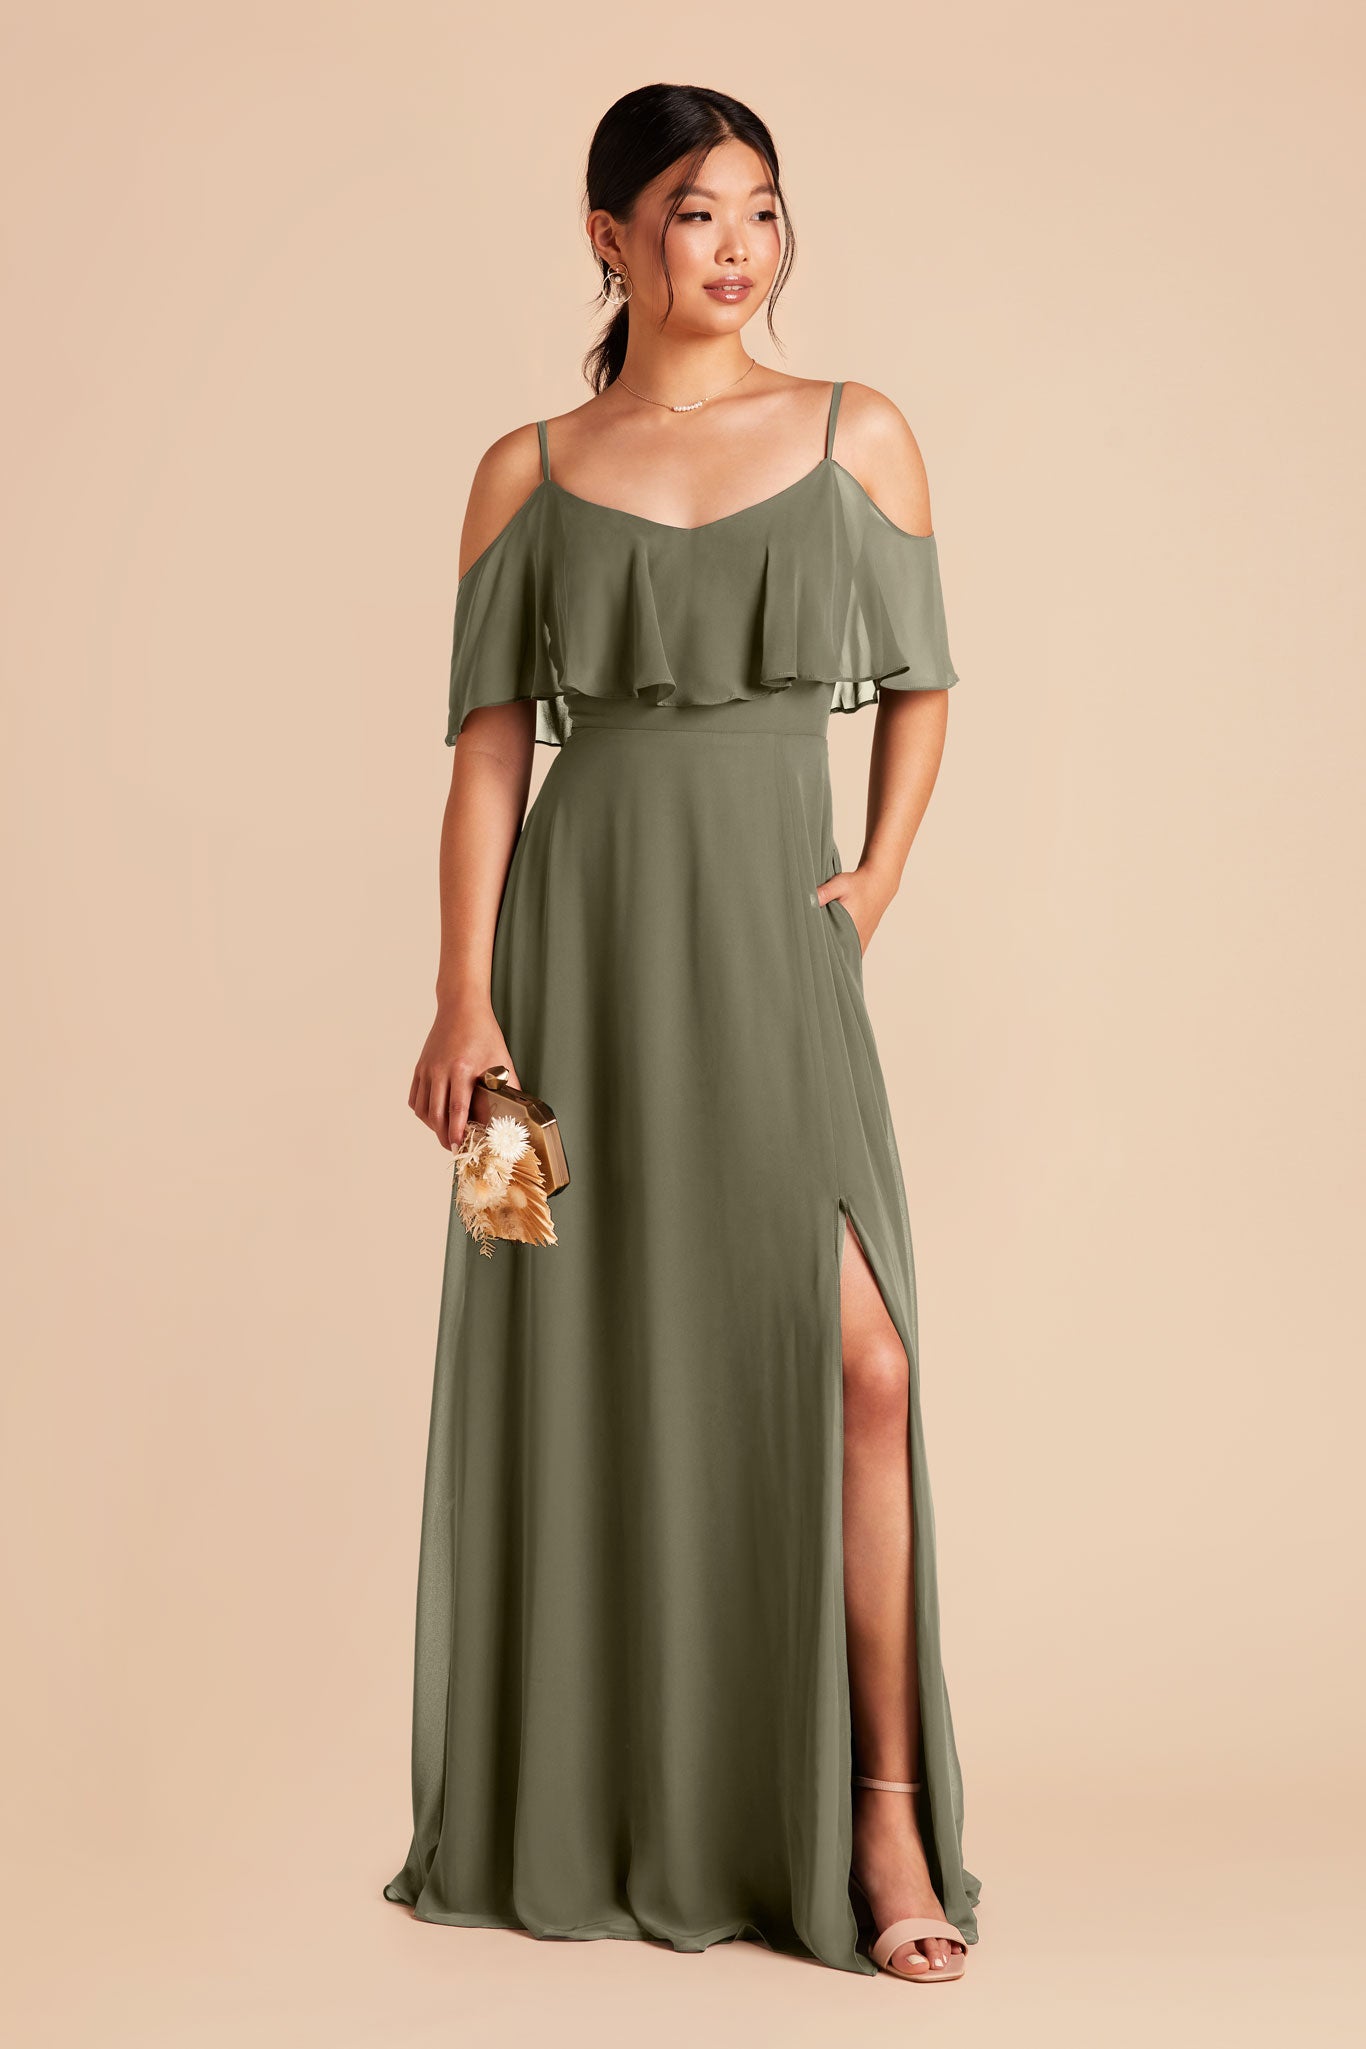 Moss Green Jane Convertible Dress by Birdy Grey